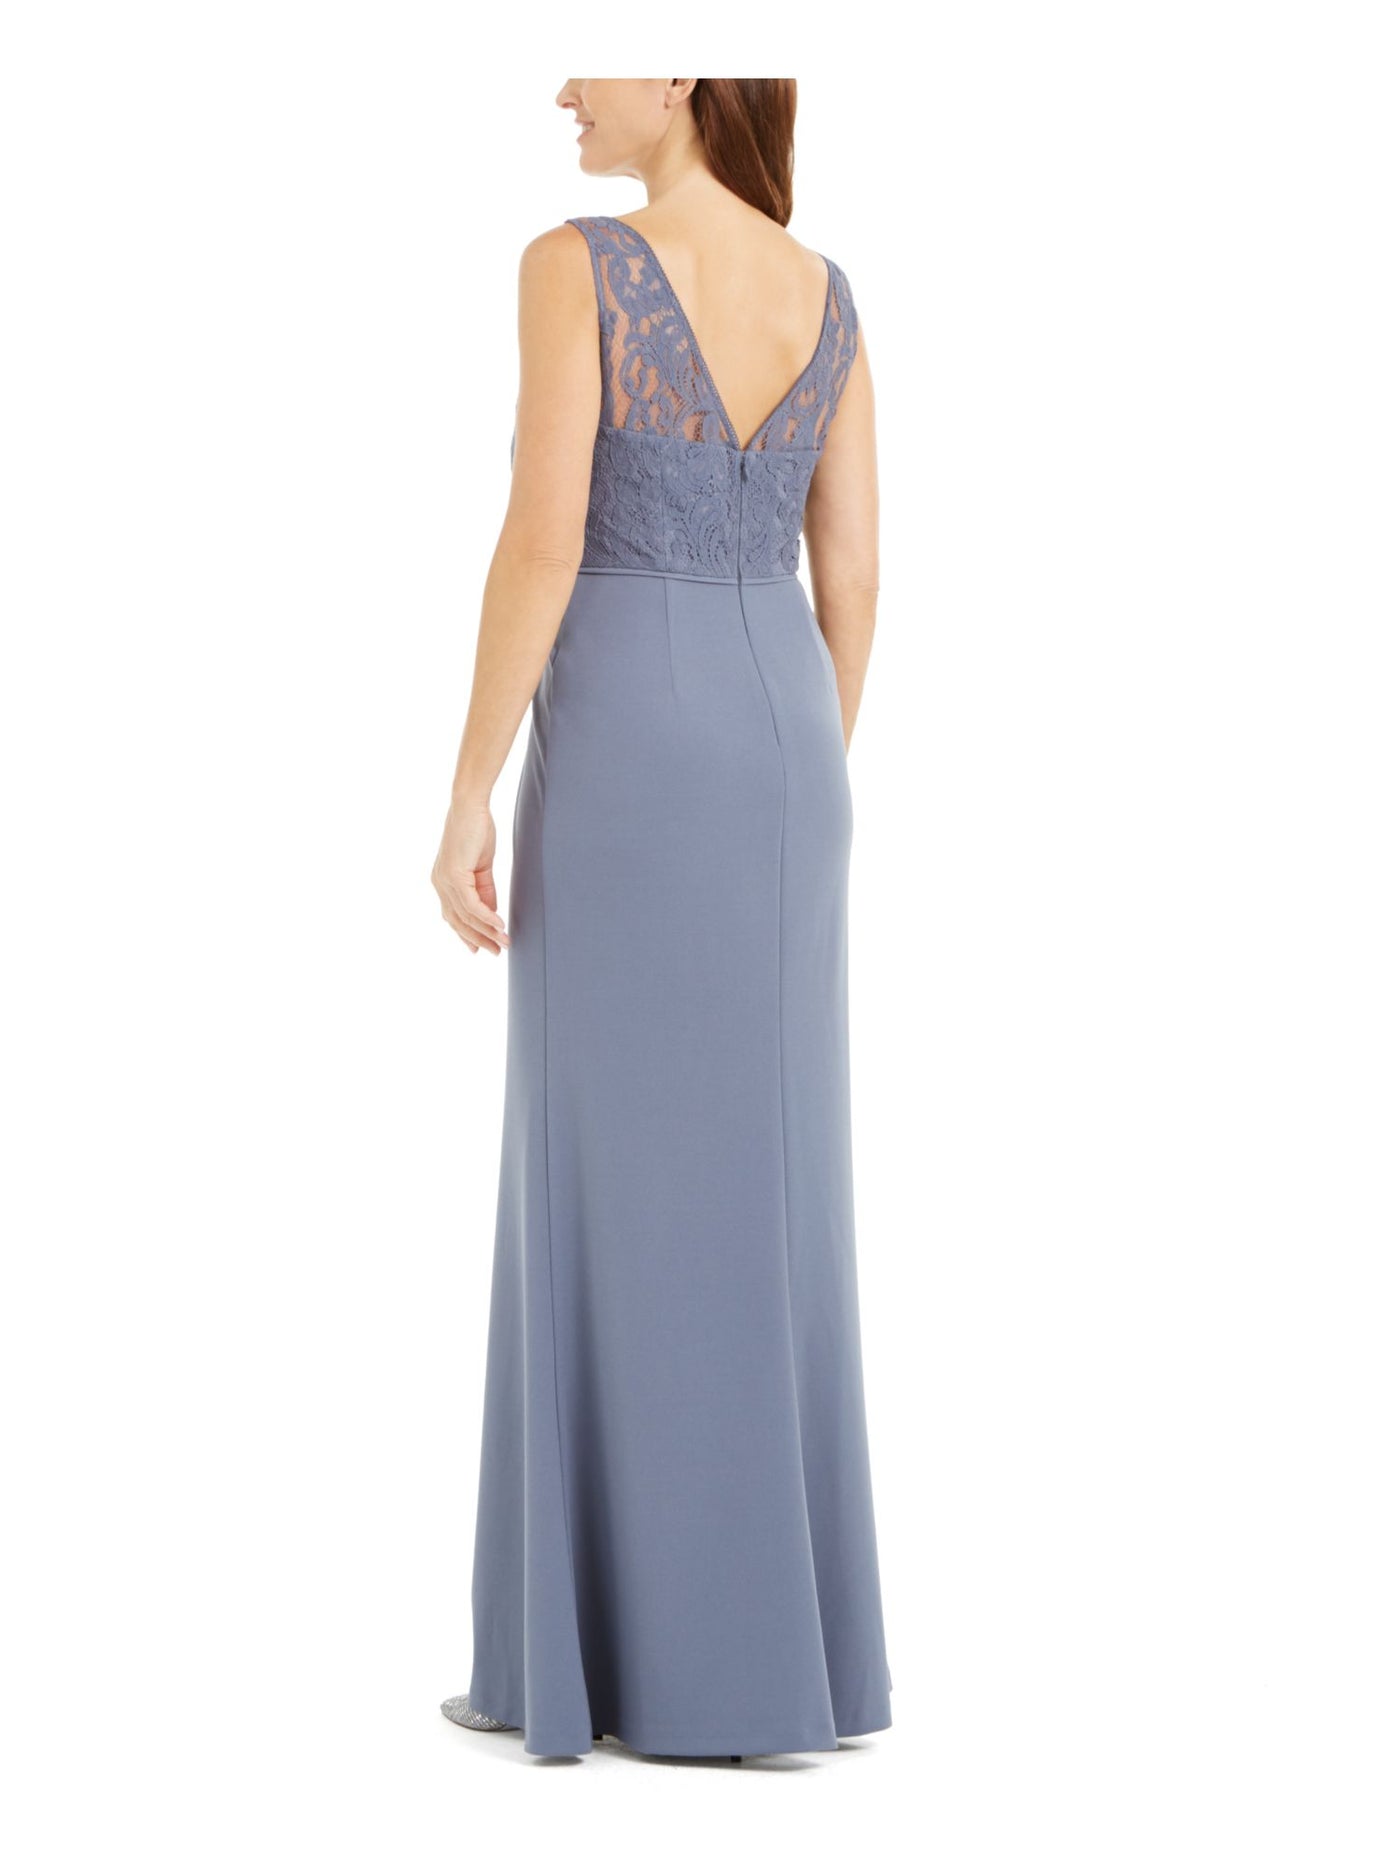 ADRIANNA PAPELL Womens Light Blue Slitted Zippered Illusion Gown Sleeveless V Neck Full-Length Formal Dress 4